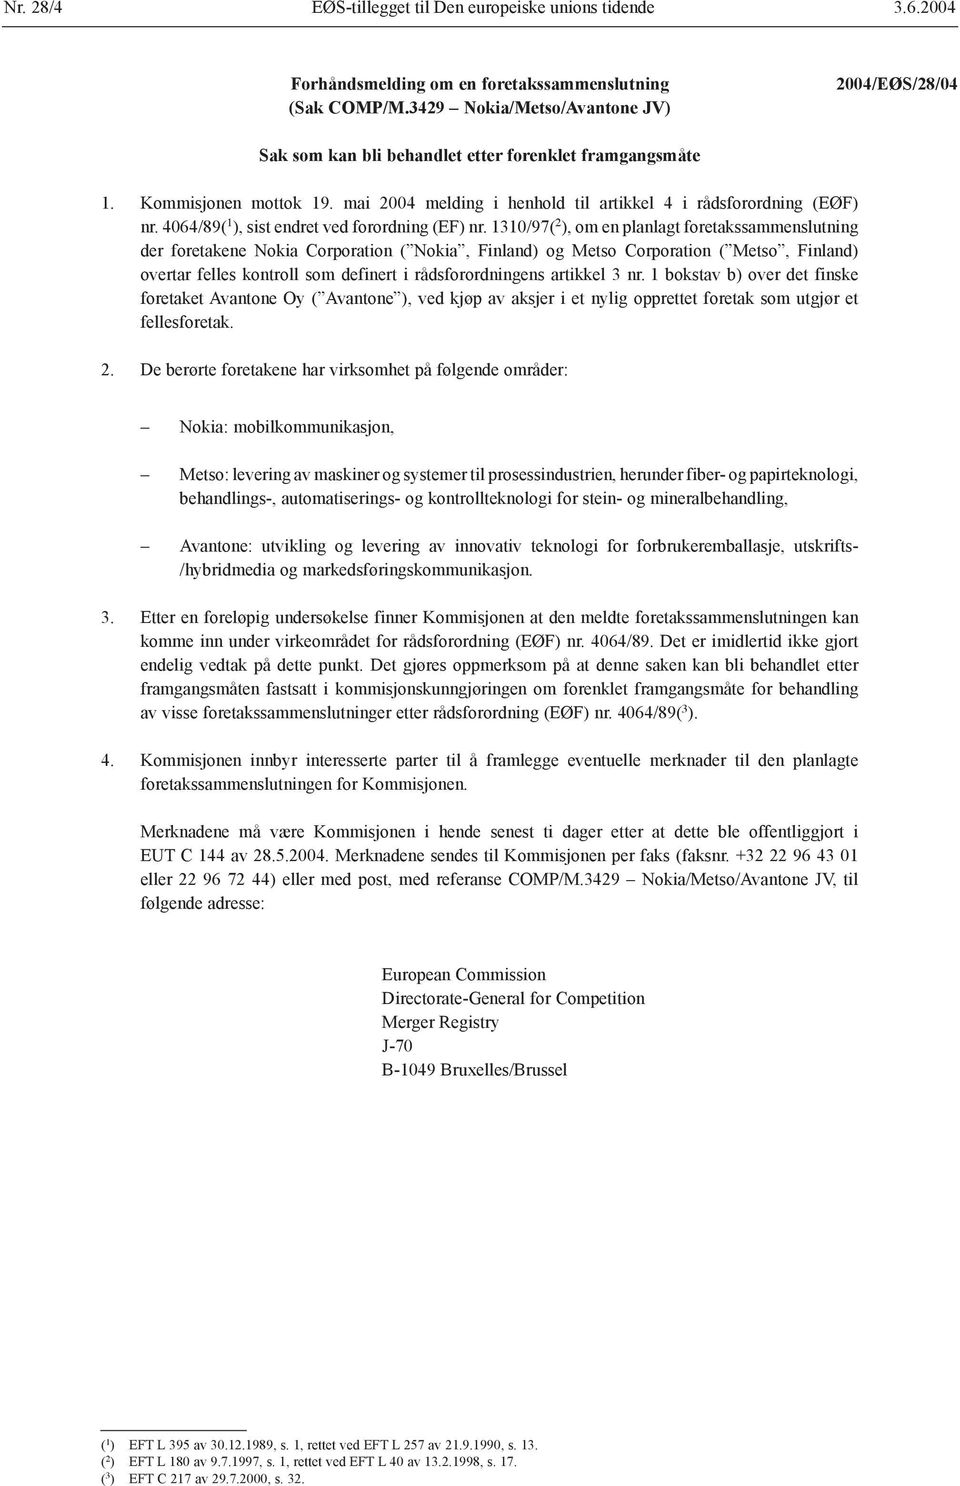 1310/97( 2 ), om en planlagt foretakssammenslutning der foretakene Nokia Corporation ( Nokia, Finland) og Metso Corporation ( Metso, Finland) overtar felles kontroll som definert i rådsforordningens